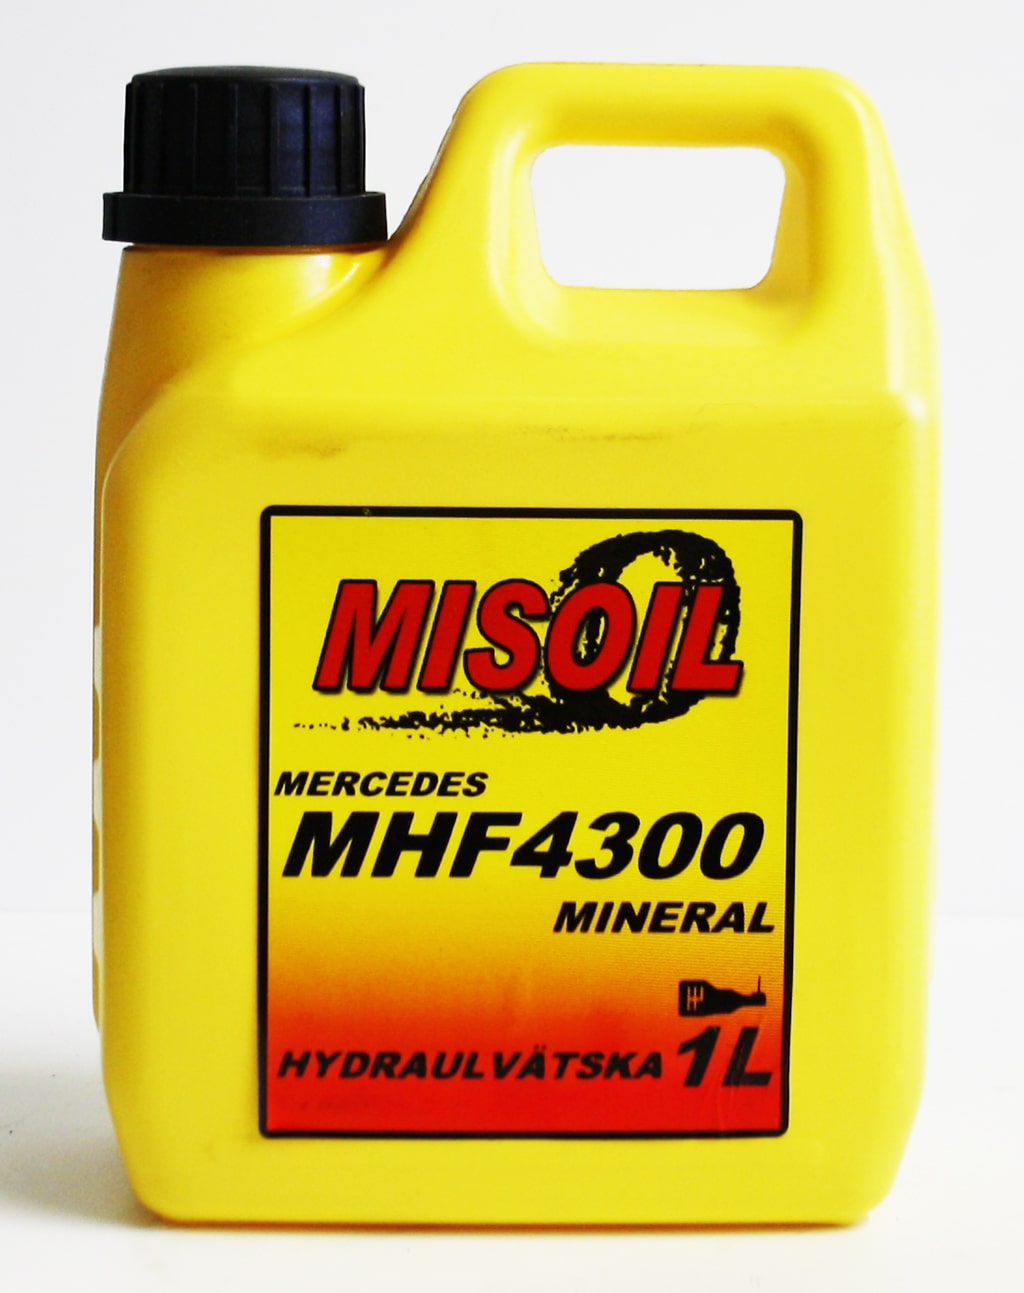 MISOIL MHF 4300